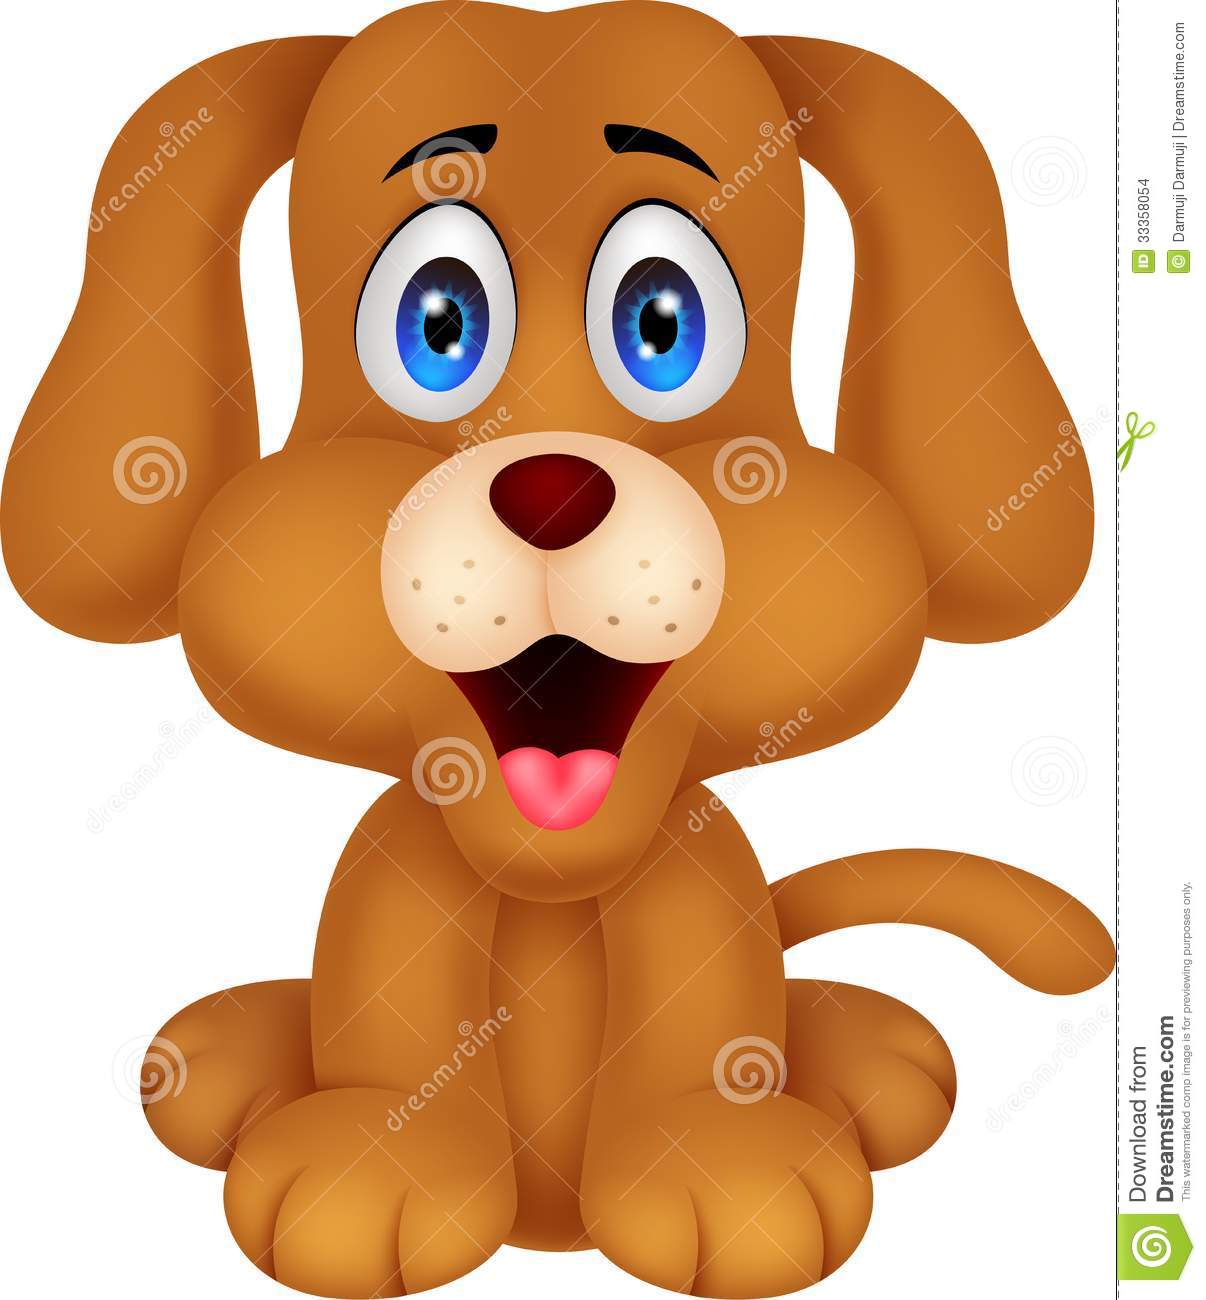 Cute Dog Clip Art Cute Dog Cartoon Illustration Character 33358054 Jpg